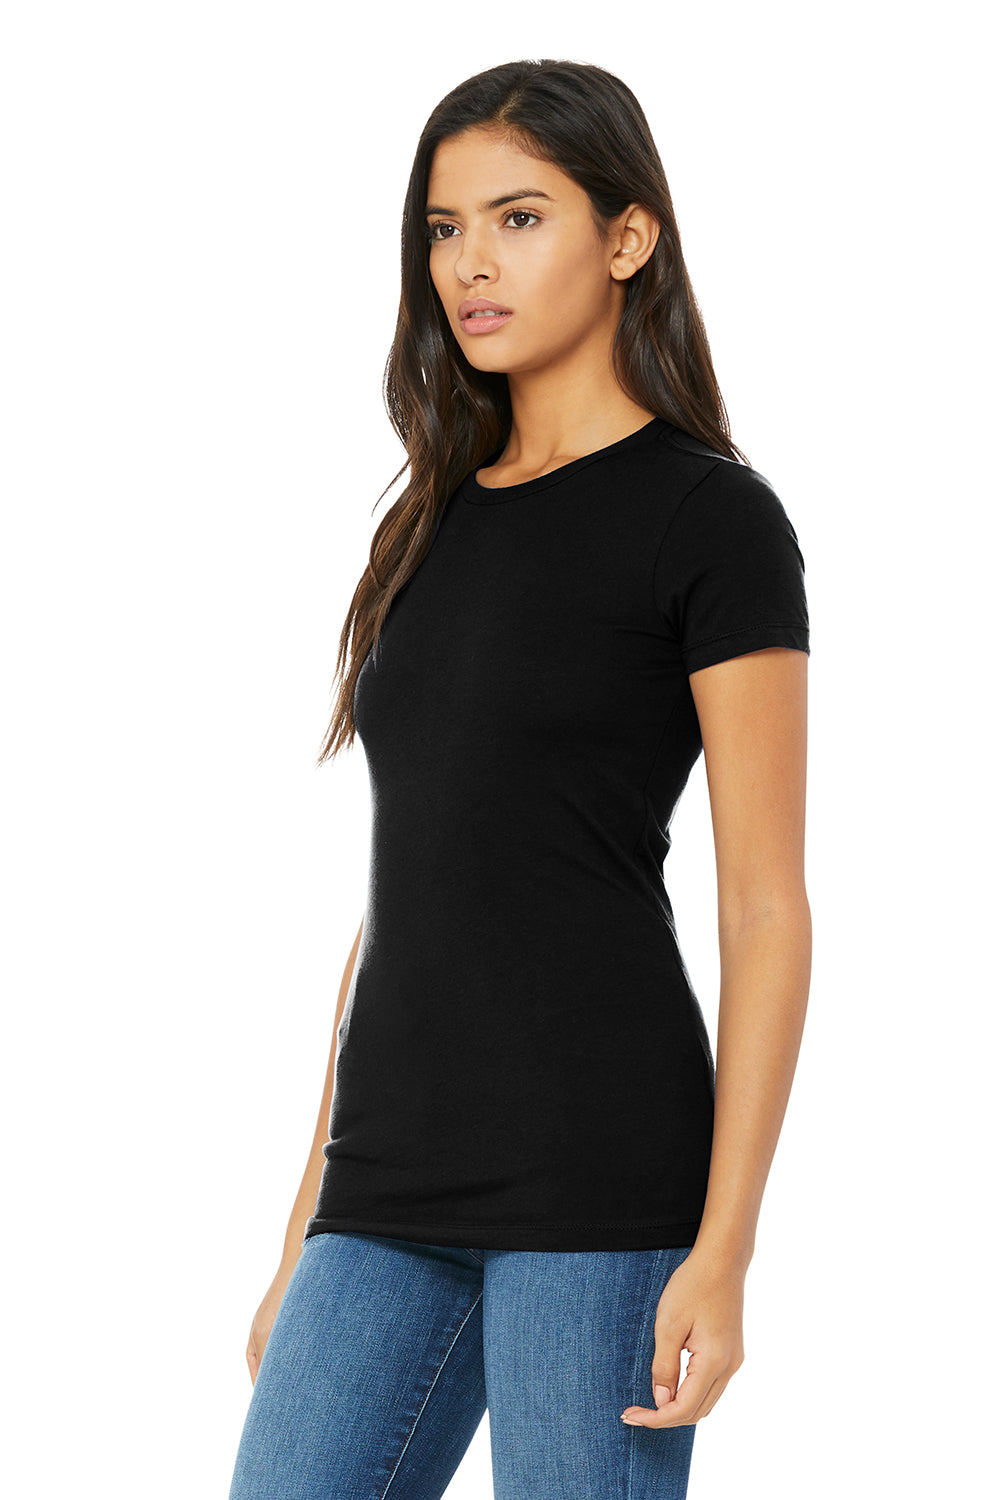 Bella + Canvas BC6004/6004 Womens The Favorite Short Sleeve Crewneck T-Shirt Black Model 3Q